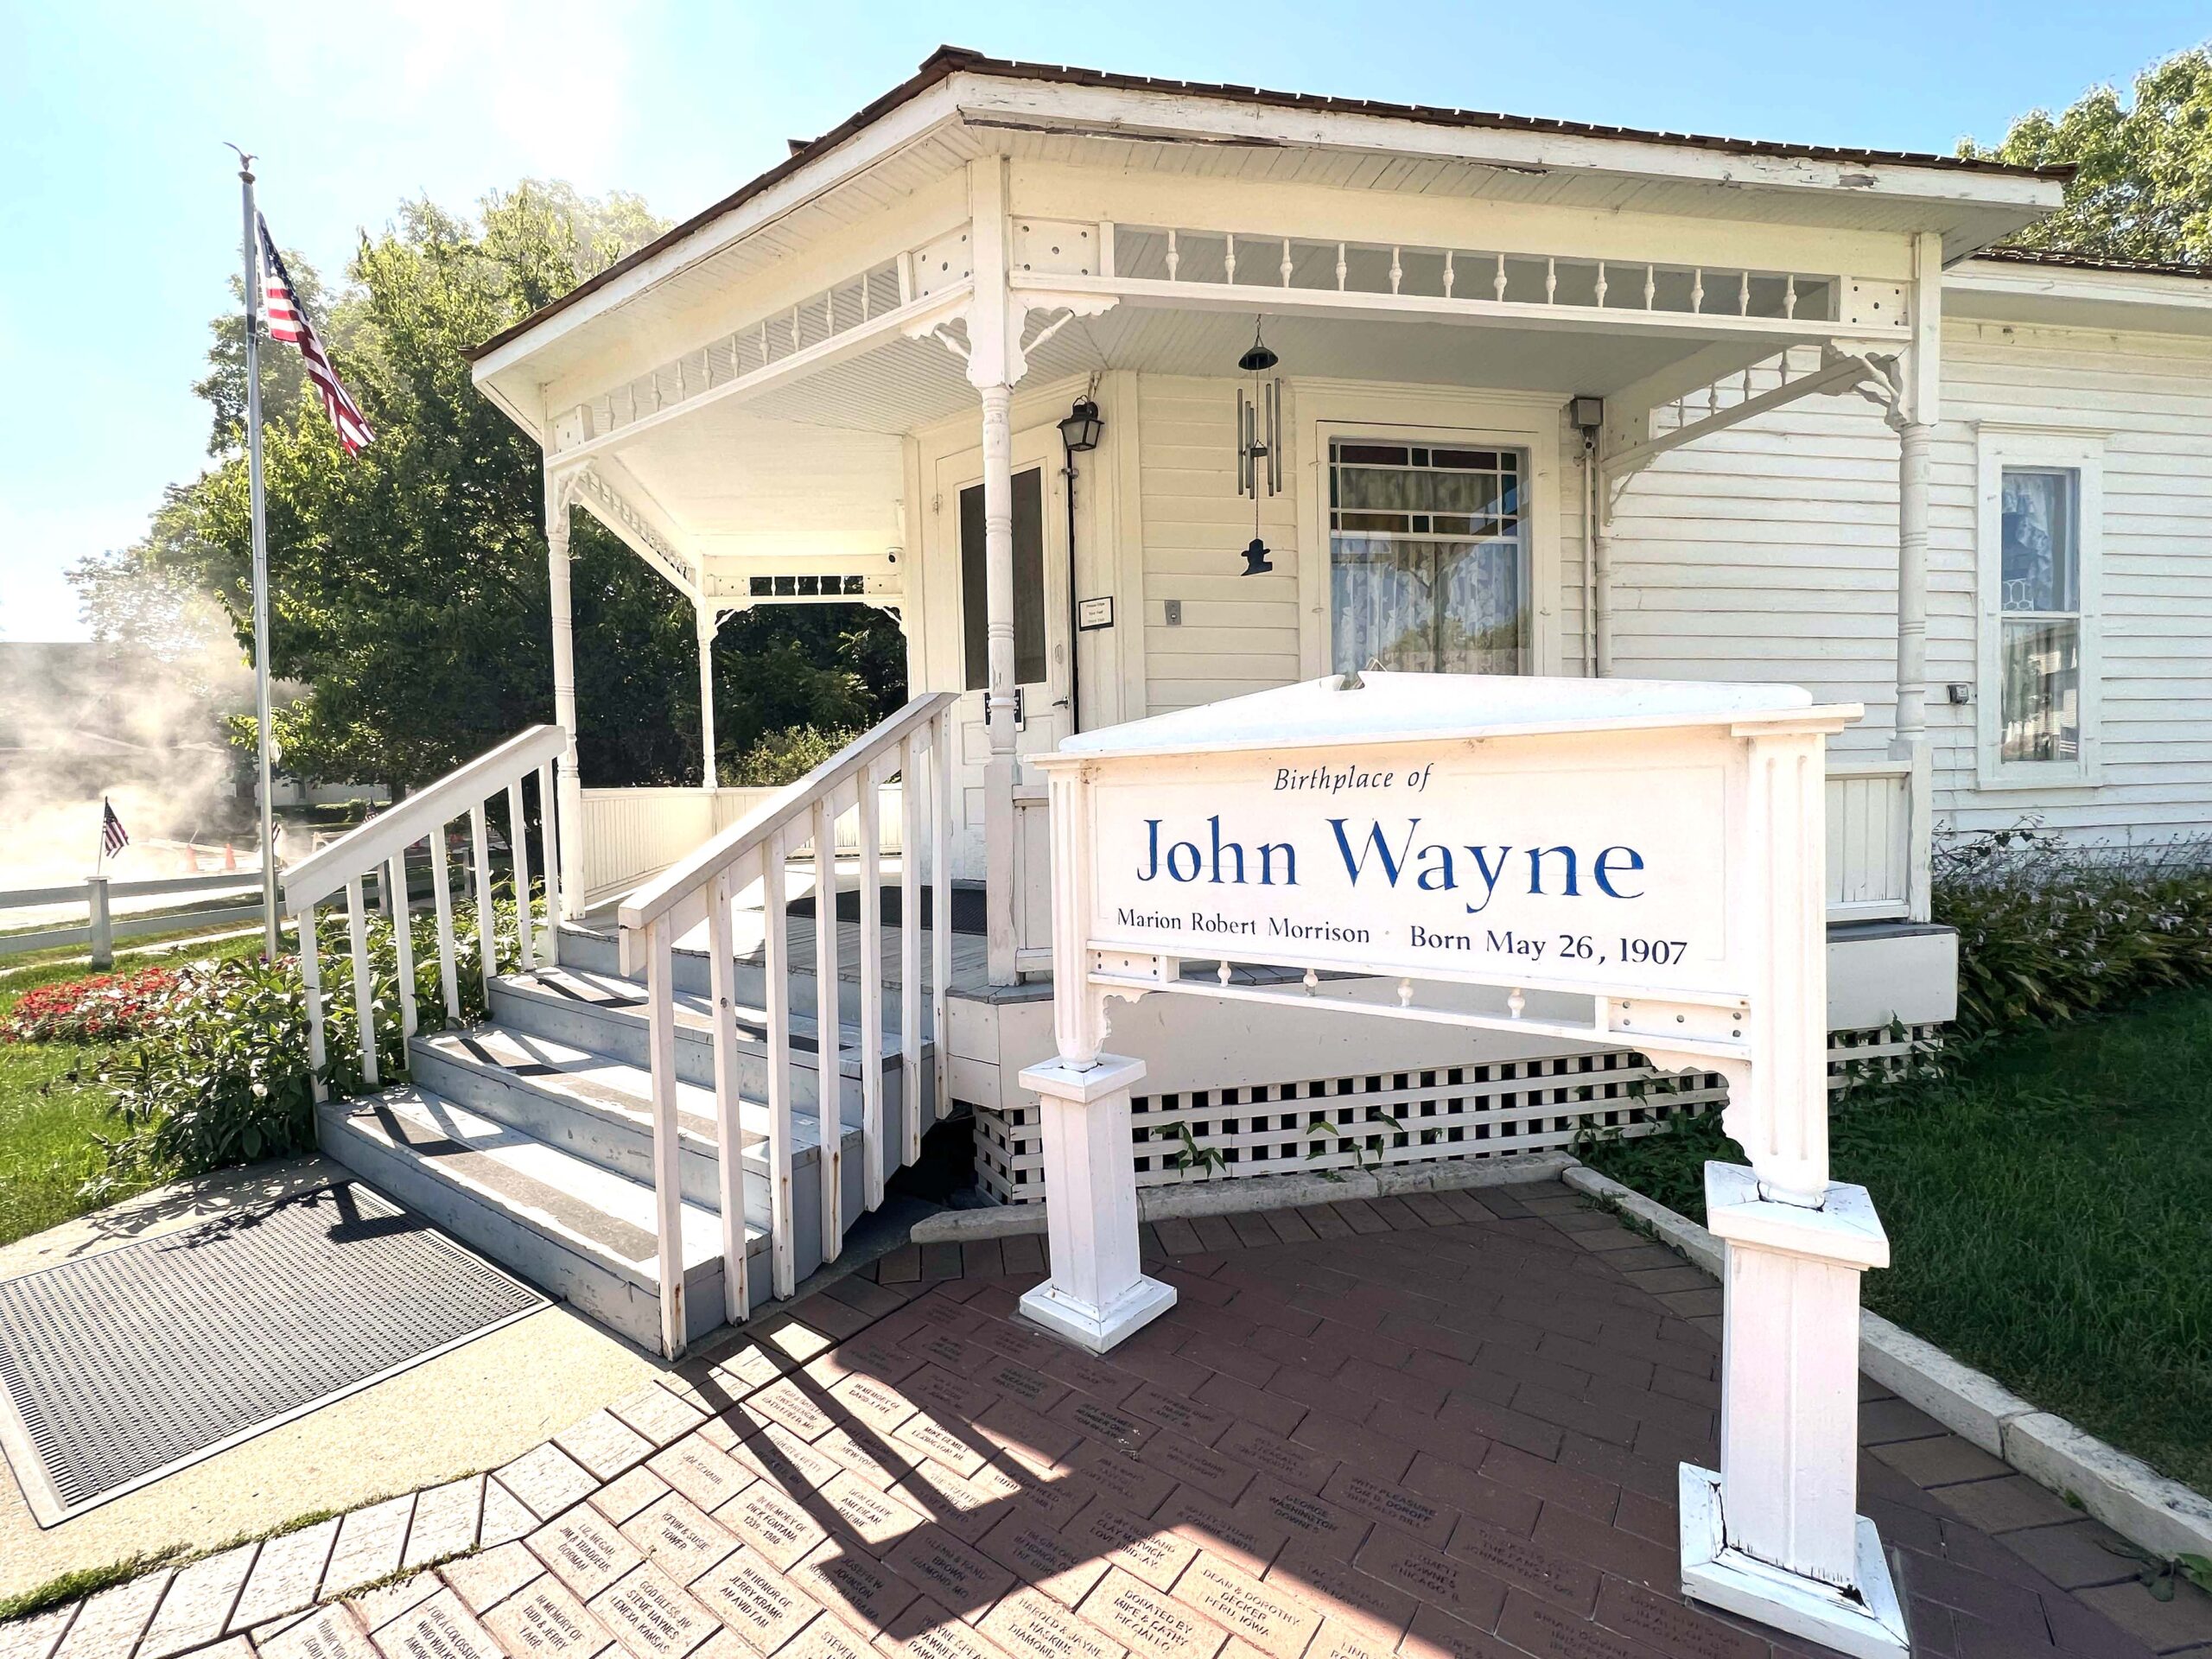 John Wayne Birthplace